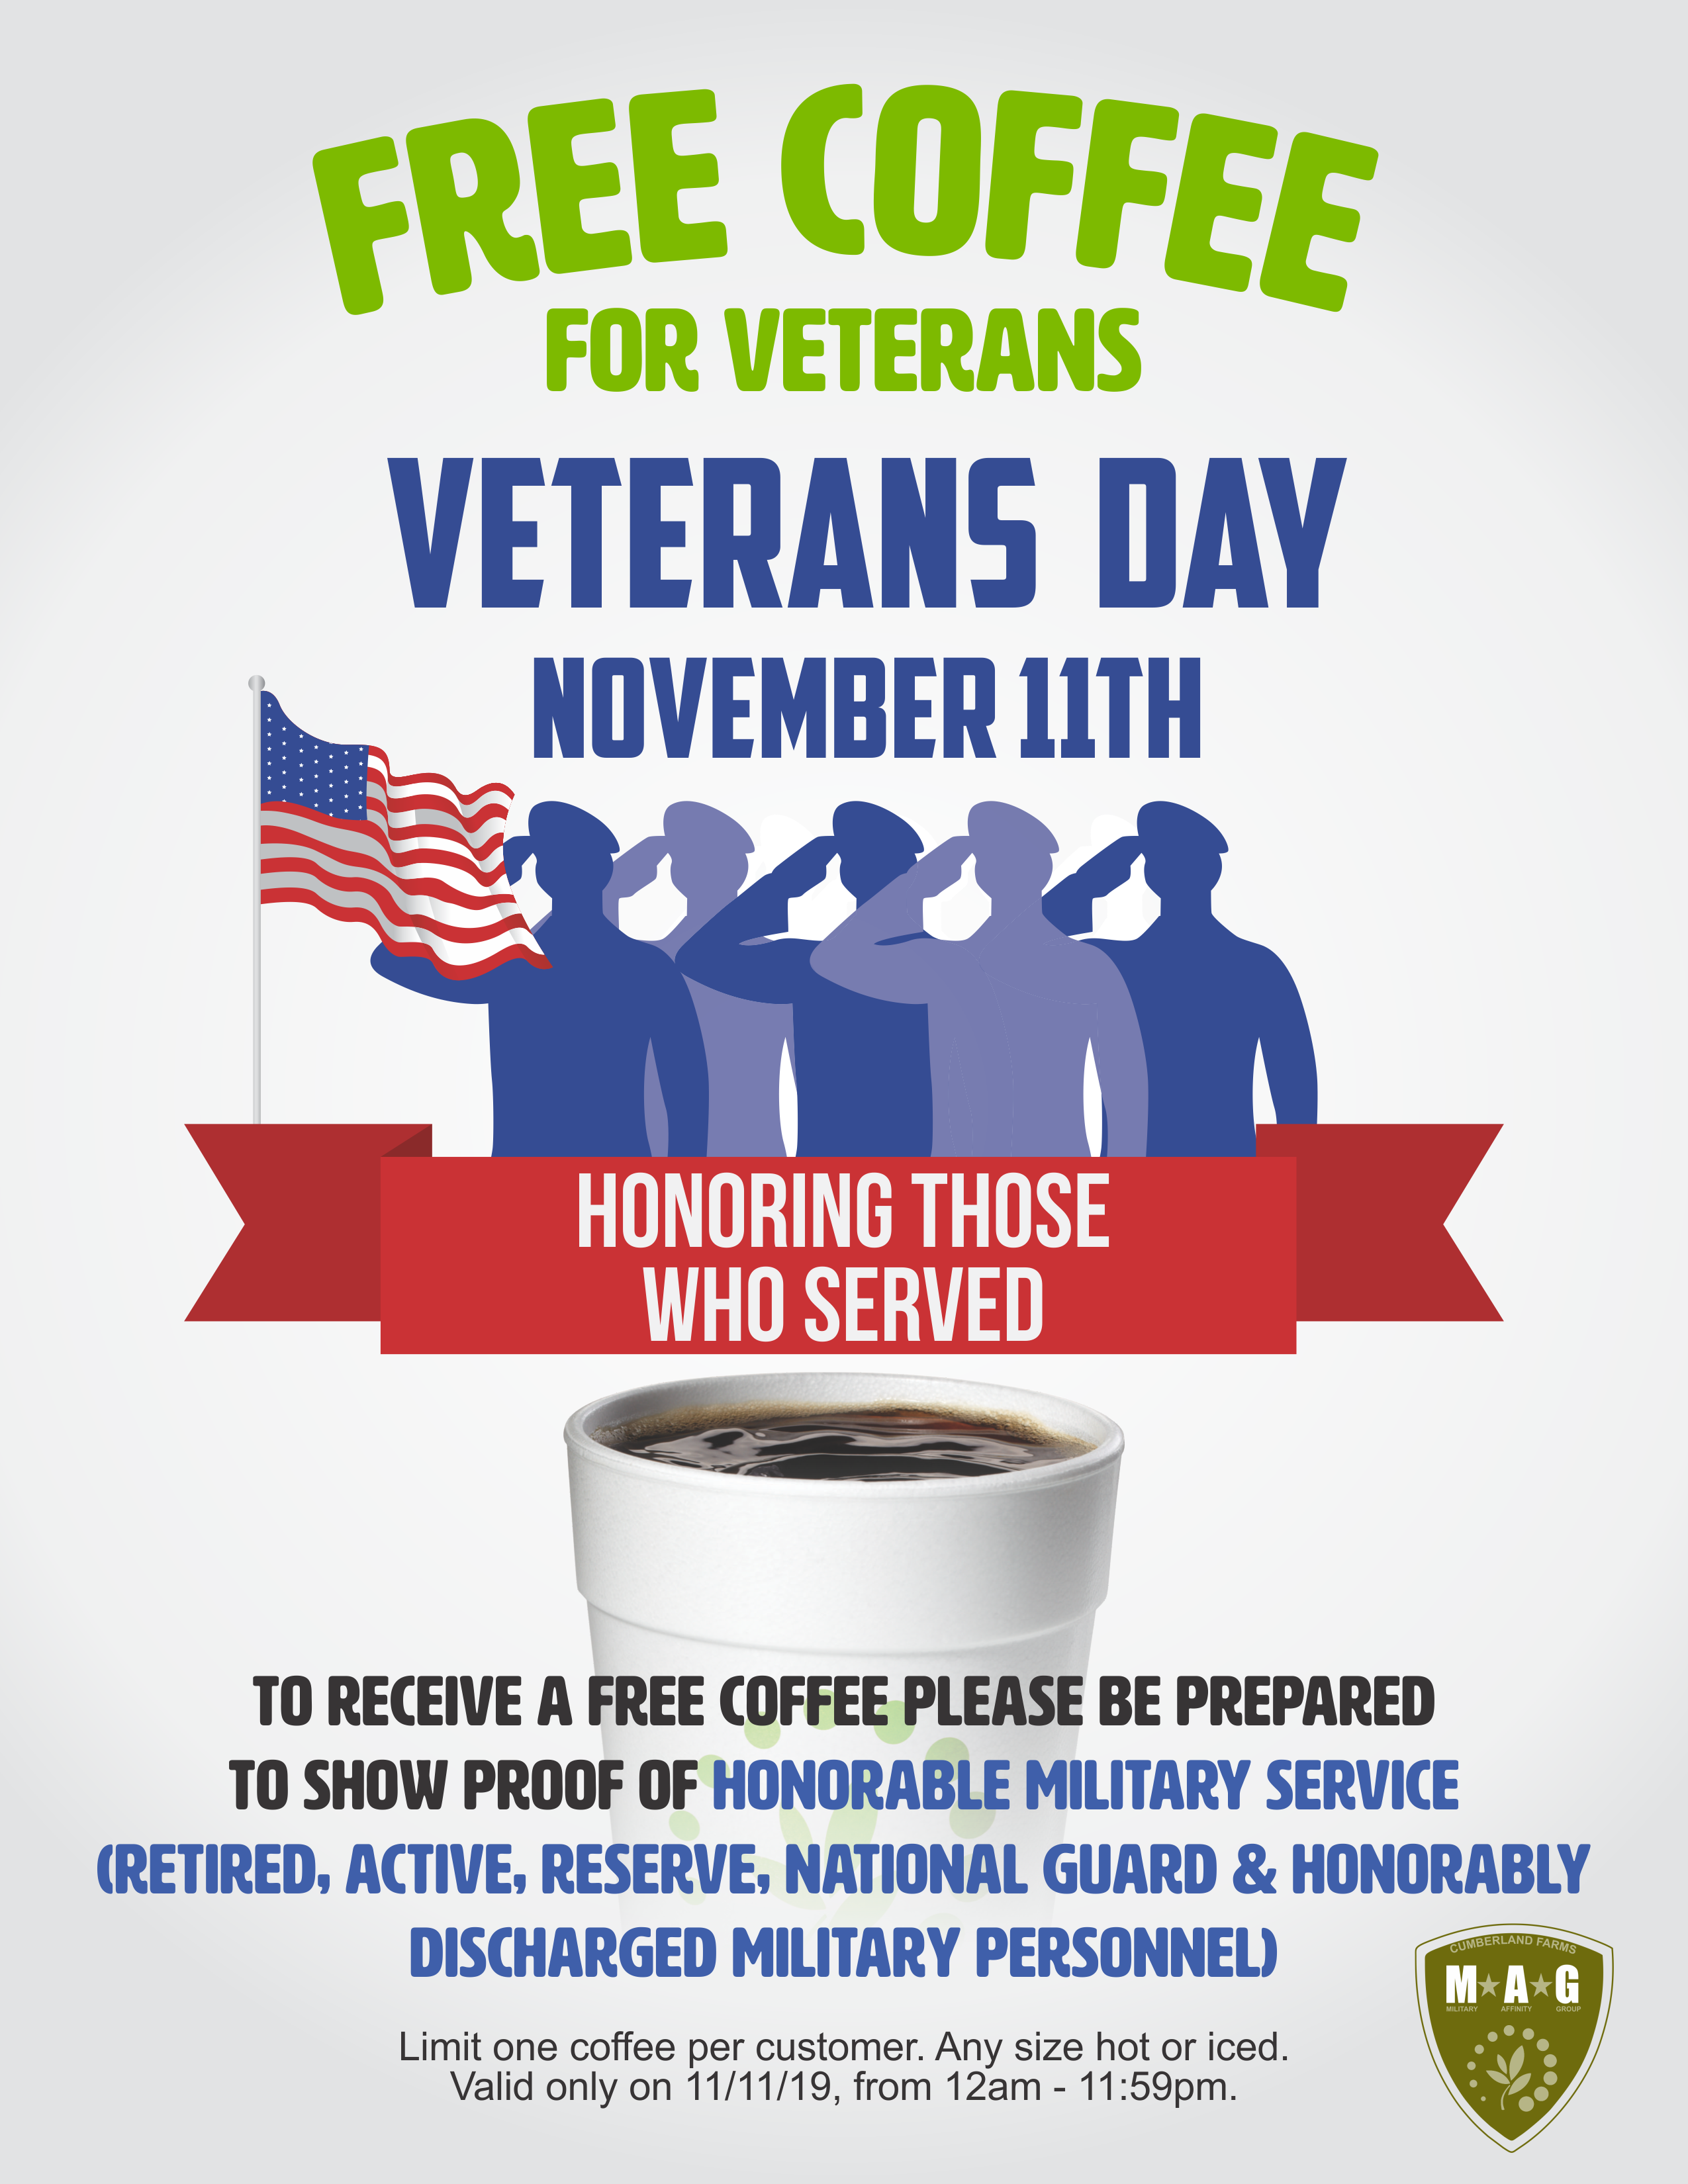 Veterans Day Free Meals Coffee Deals Starbucks Subway Target